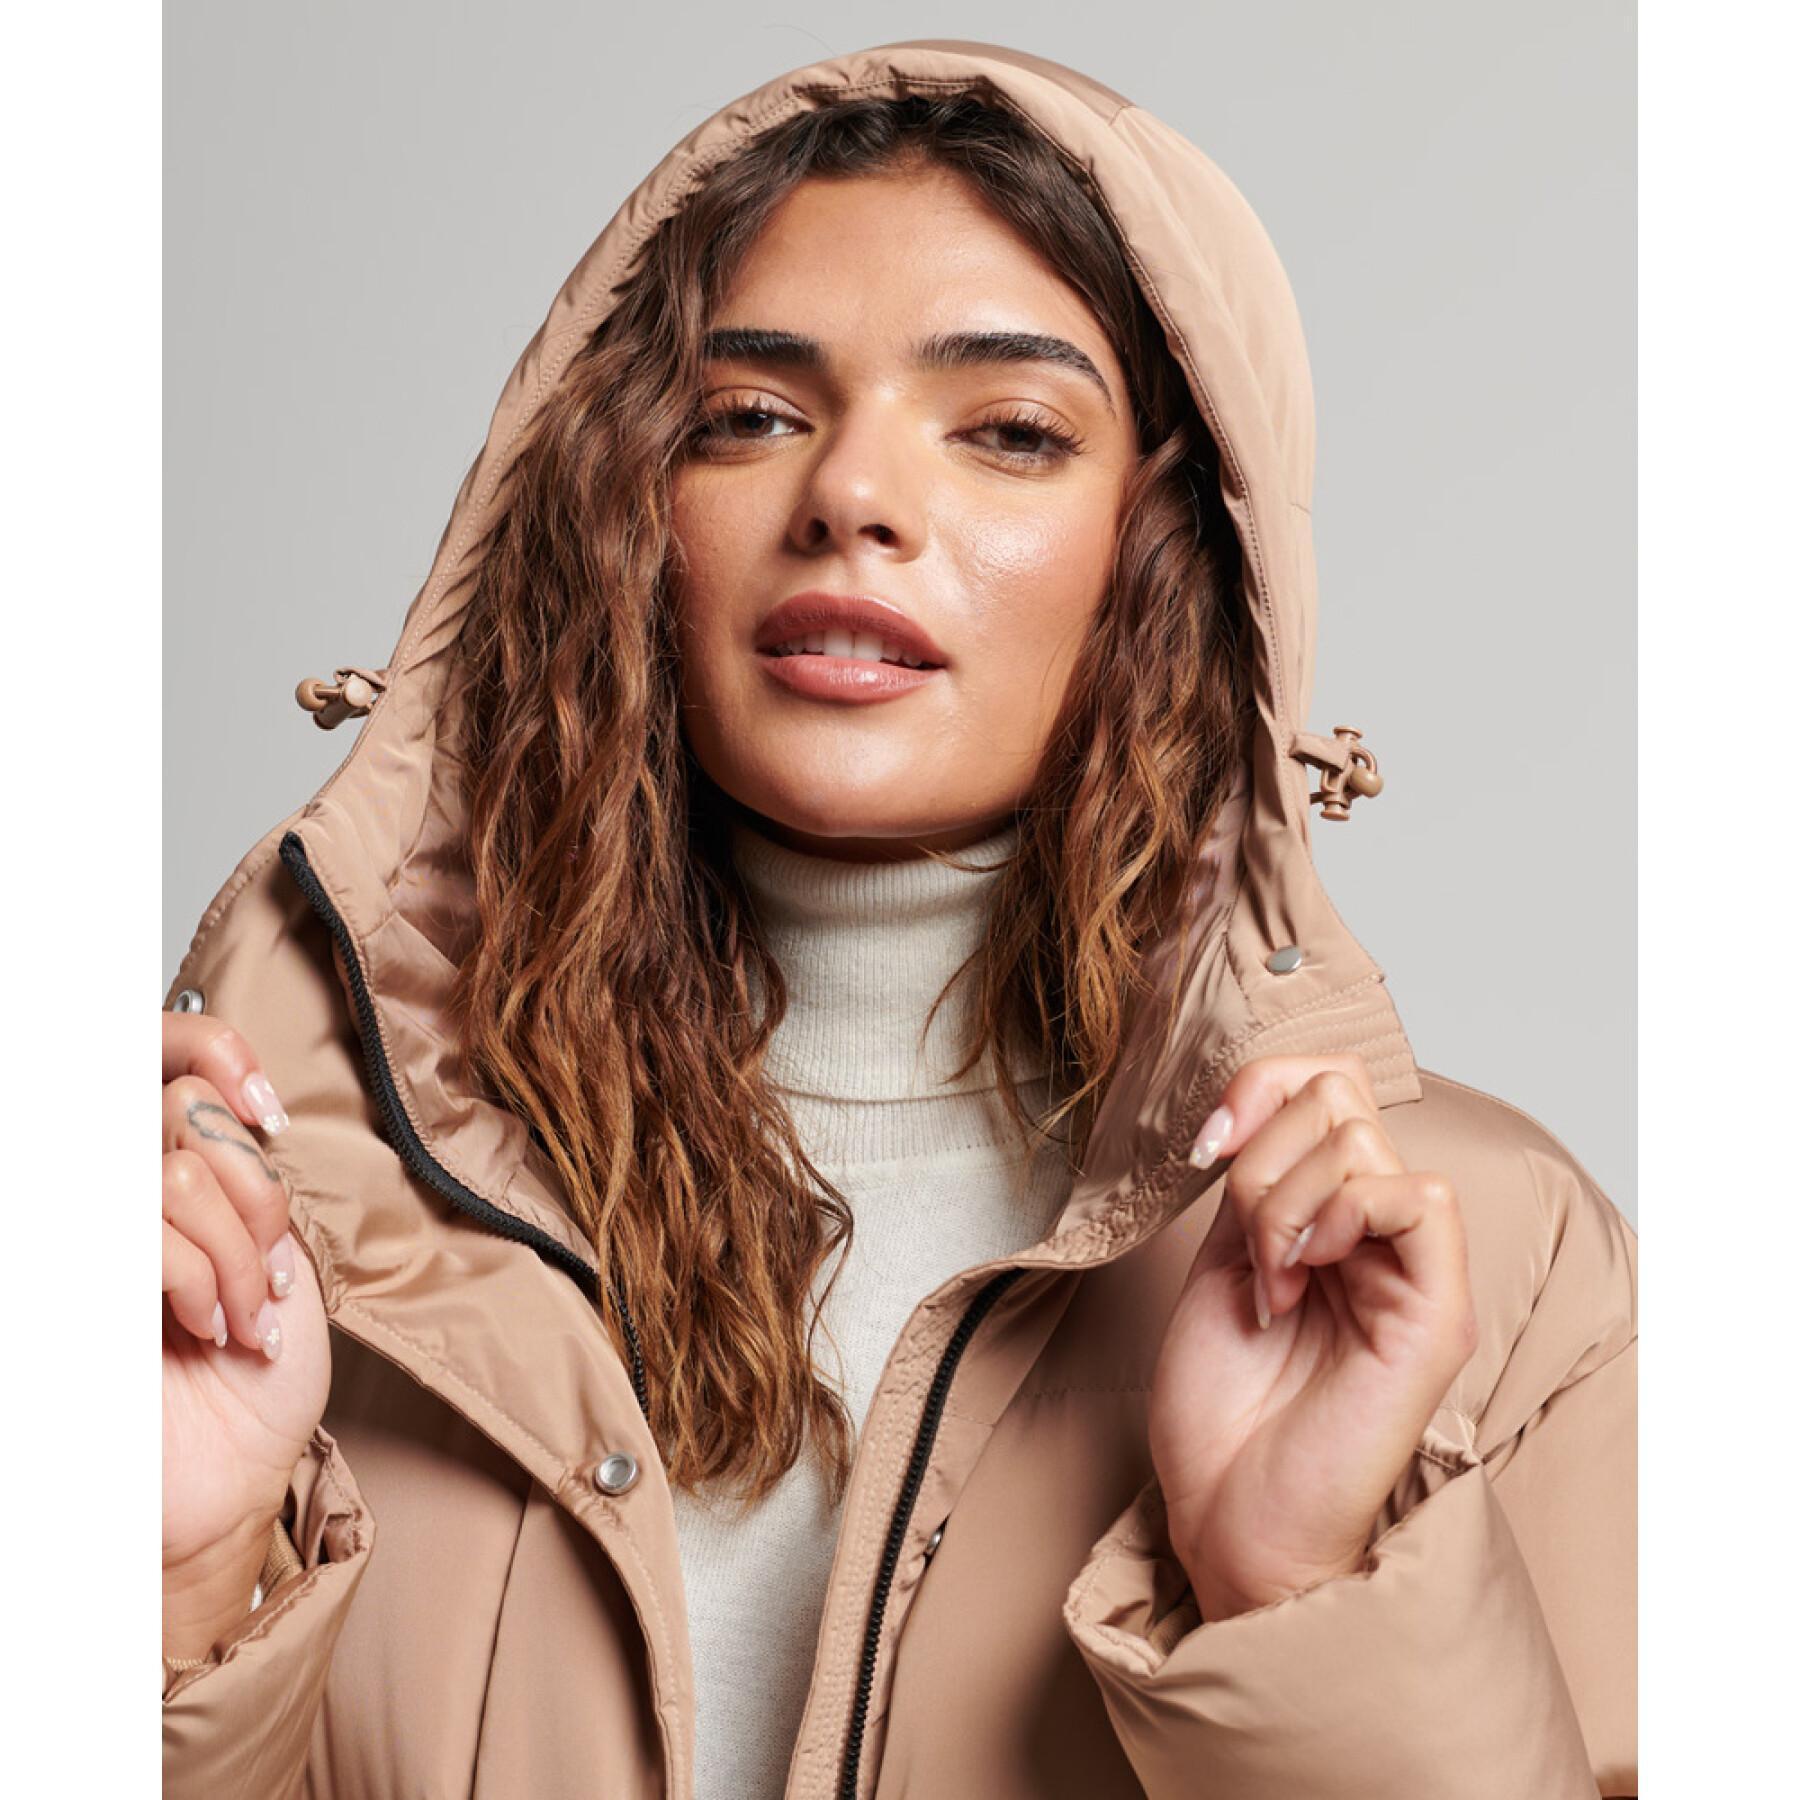 Women's hooded maxi jacket Superdry